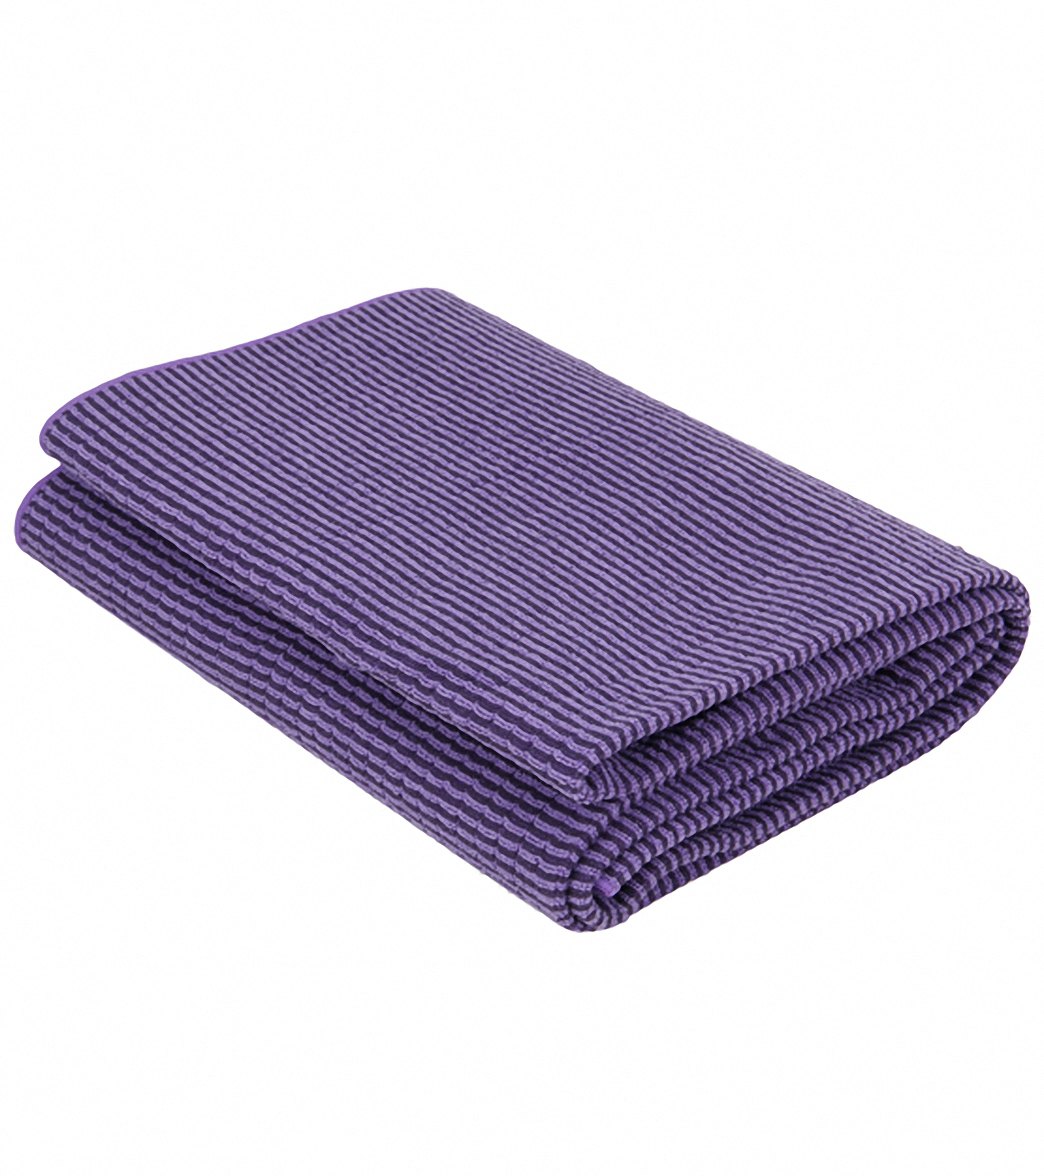 5BILLION Hot Yoga Mat Towel 24x72 inch,61 x 183cm Hot Yoga Towel with  Corner Pocket, Non Slip Yoga Mat Cover Towel, Super Absorbent, Machine  Washable